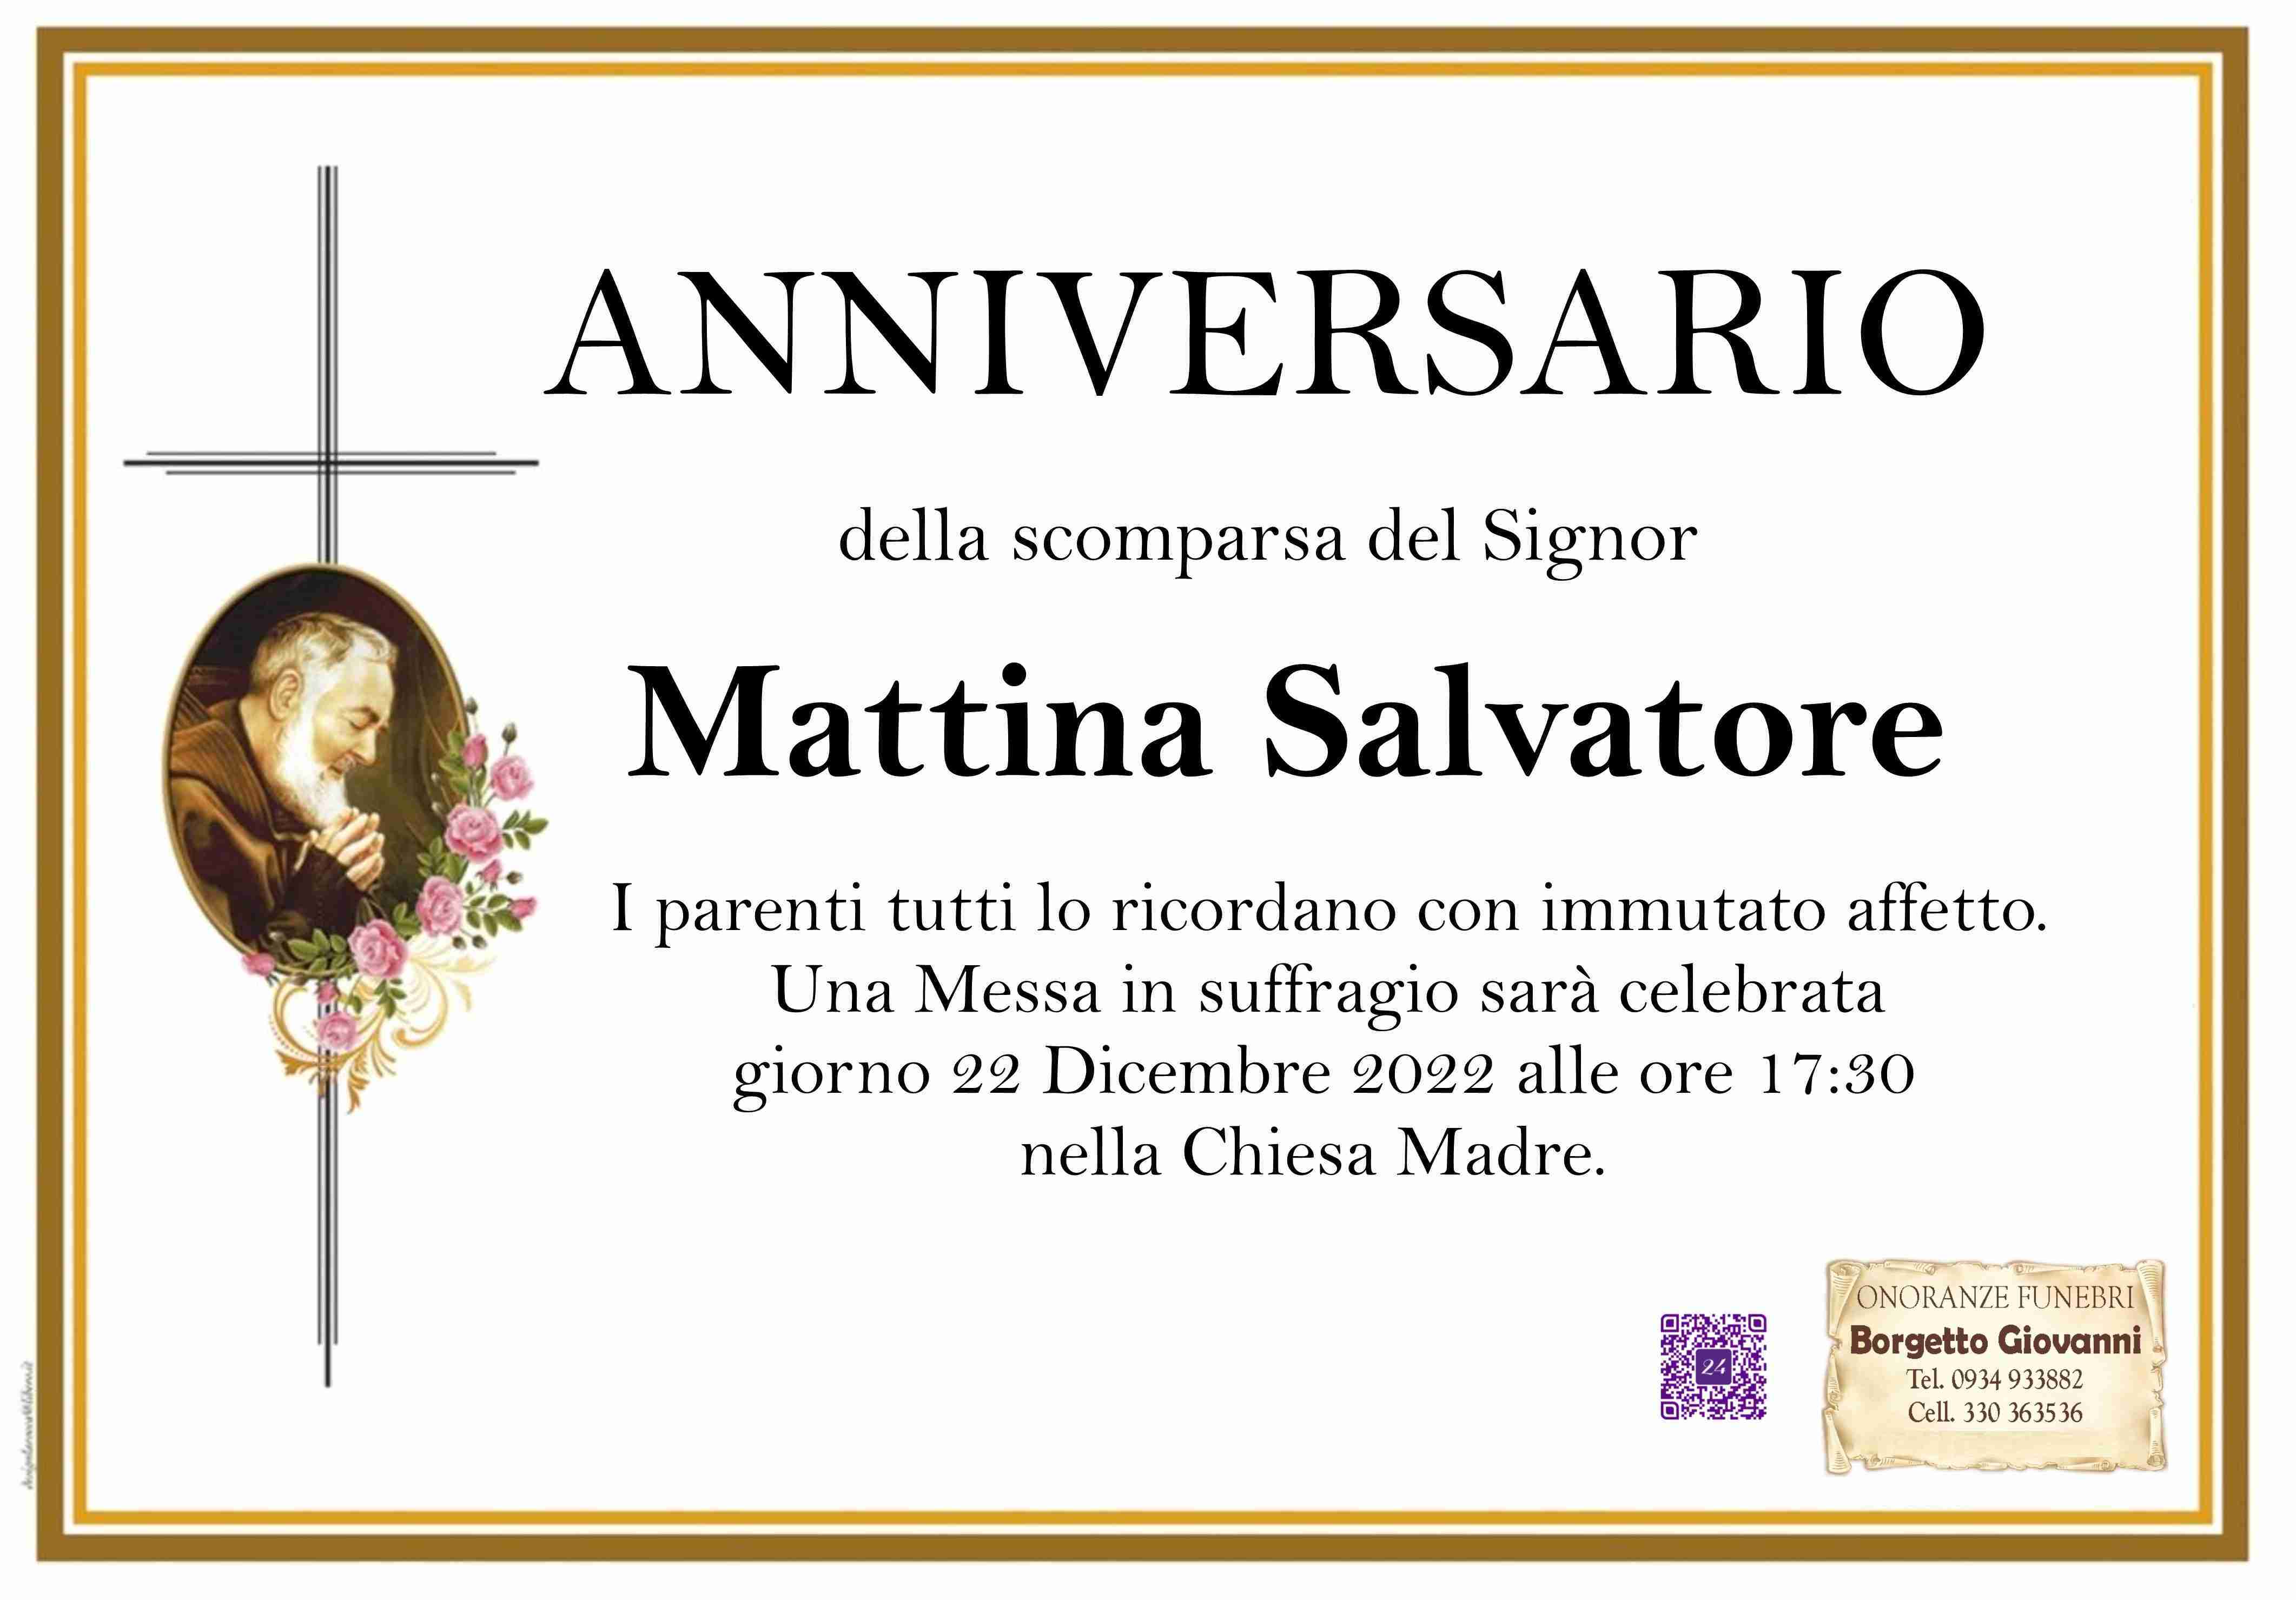 Salvatore Mattina